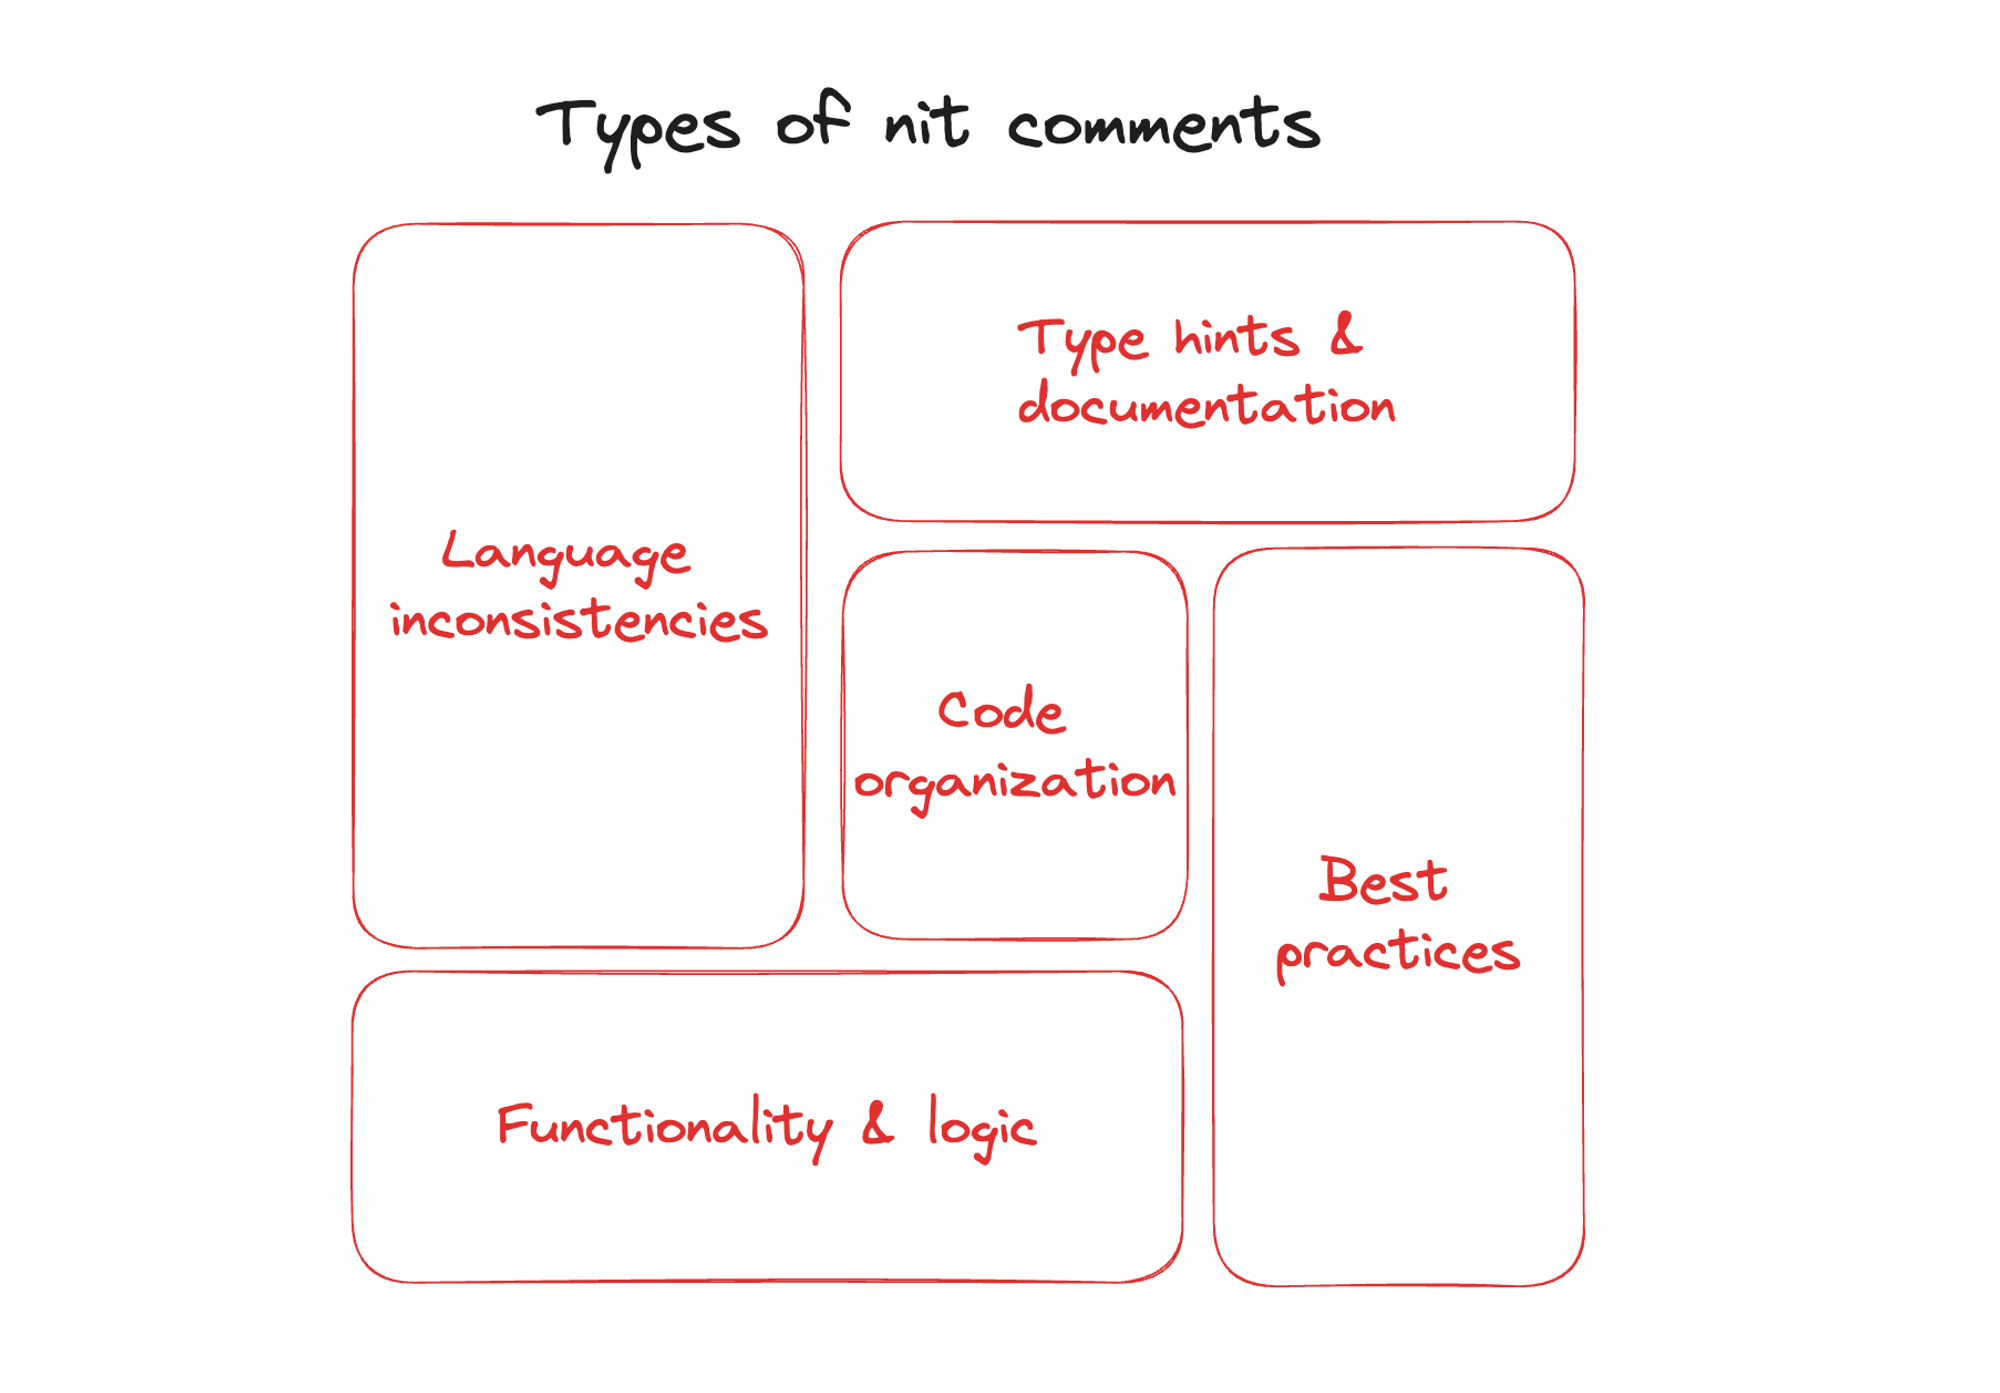 Language inconsistencies, type hints & documentation, code organization, functionality & logic, best practices